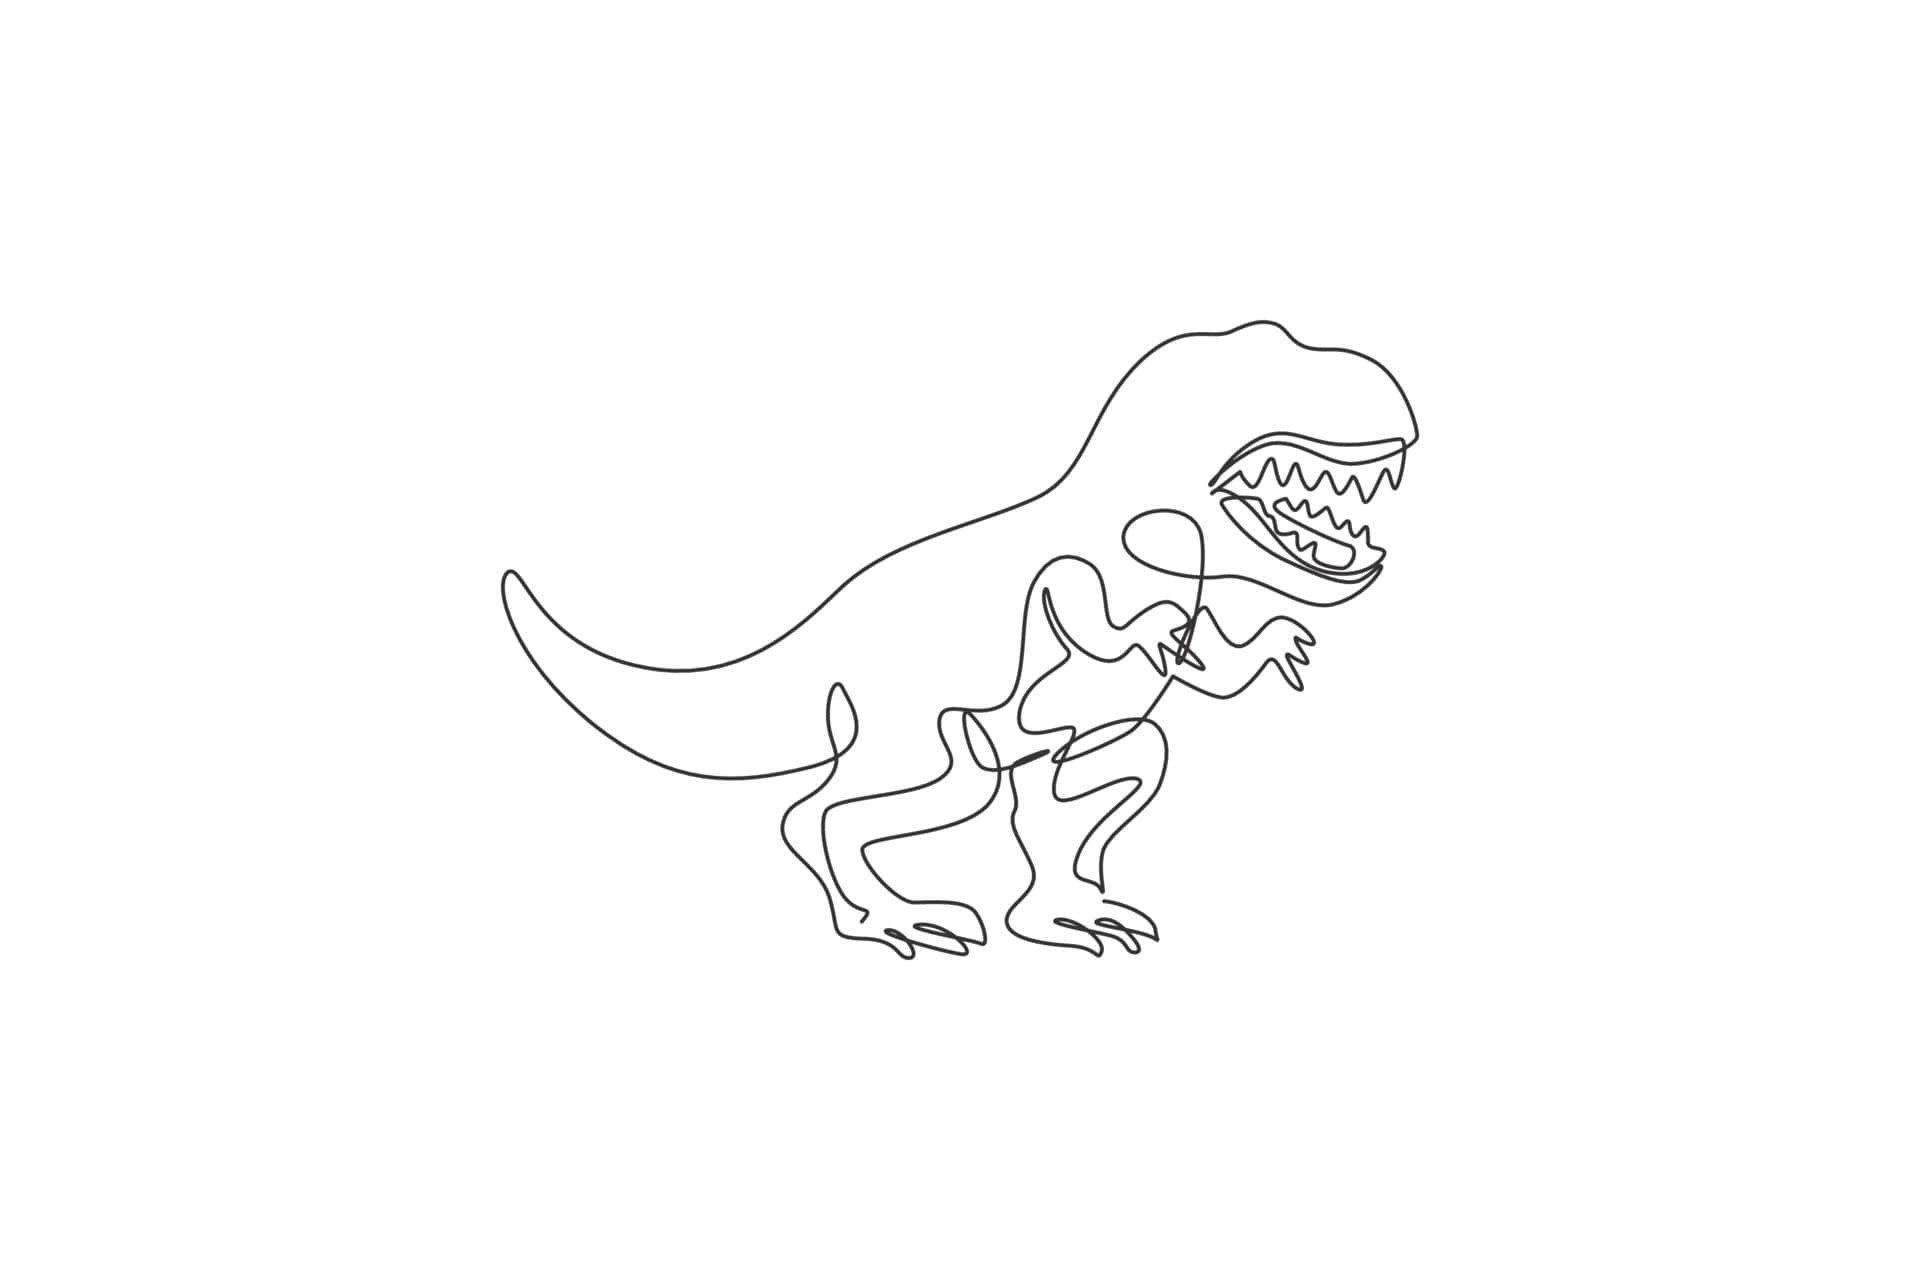 Ent-rex Teckning På Vit Bakgrund